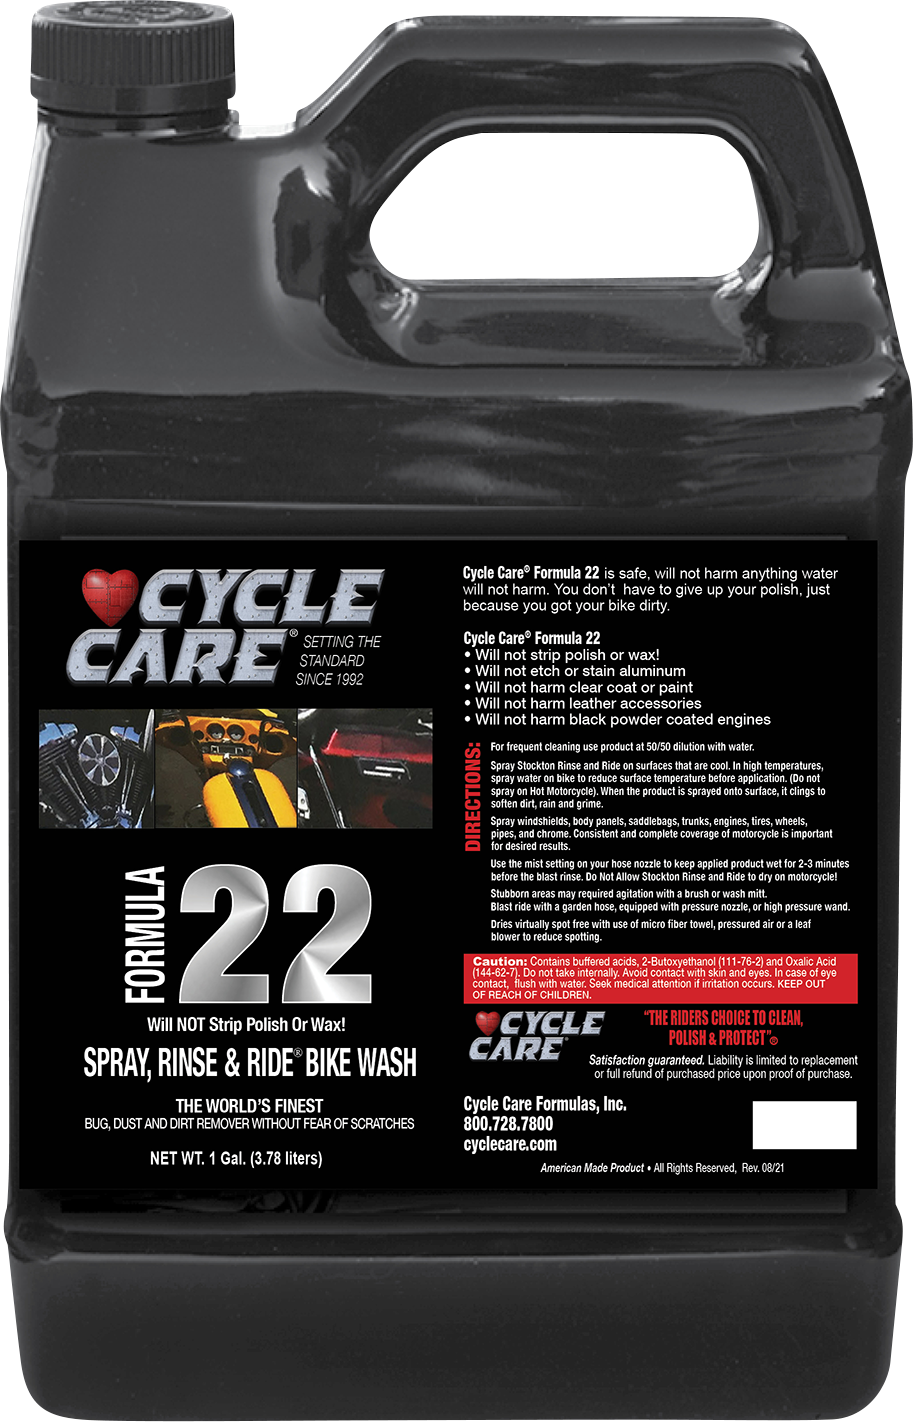 CYCLE CARE FORMULAS Formula 22 Spray & Ride - 1 U.S. gal. 22128